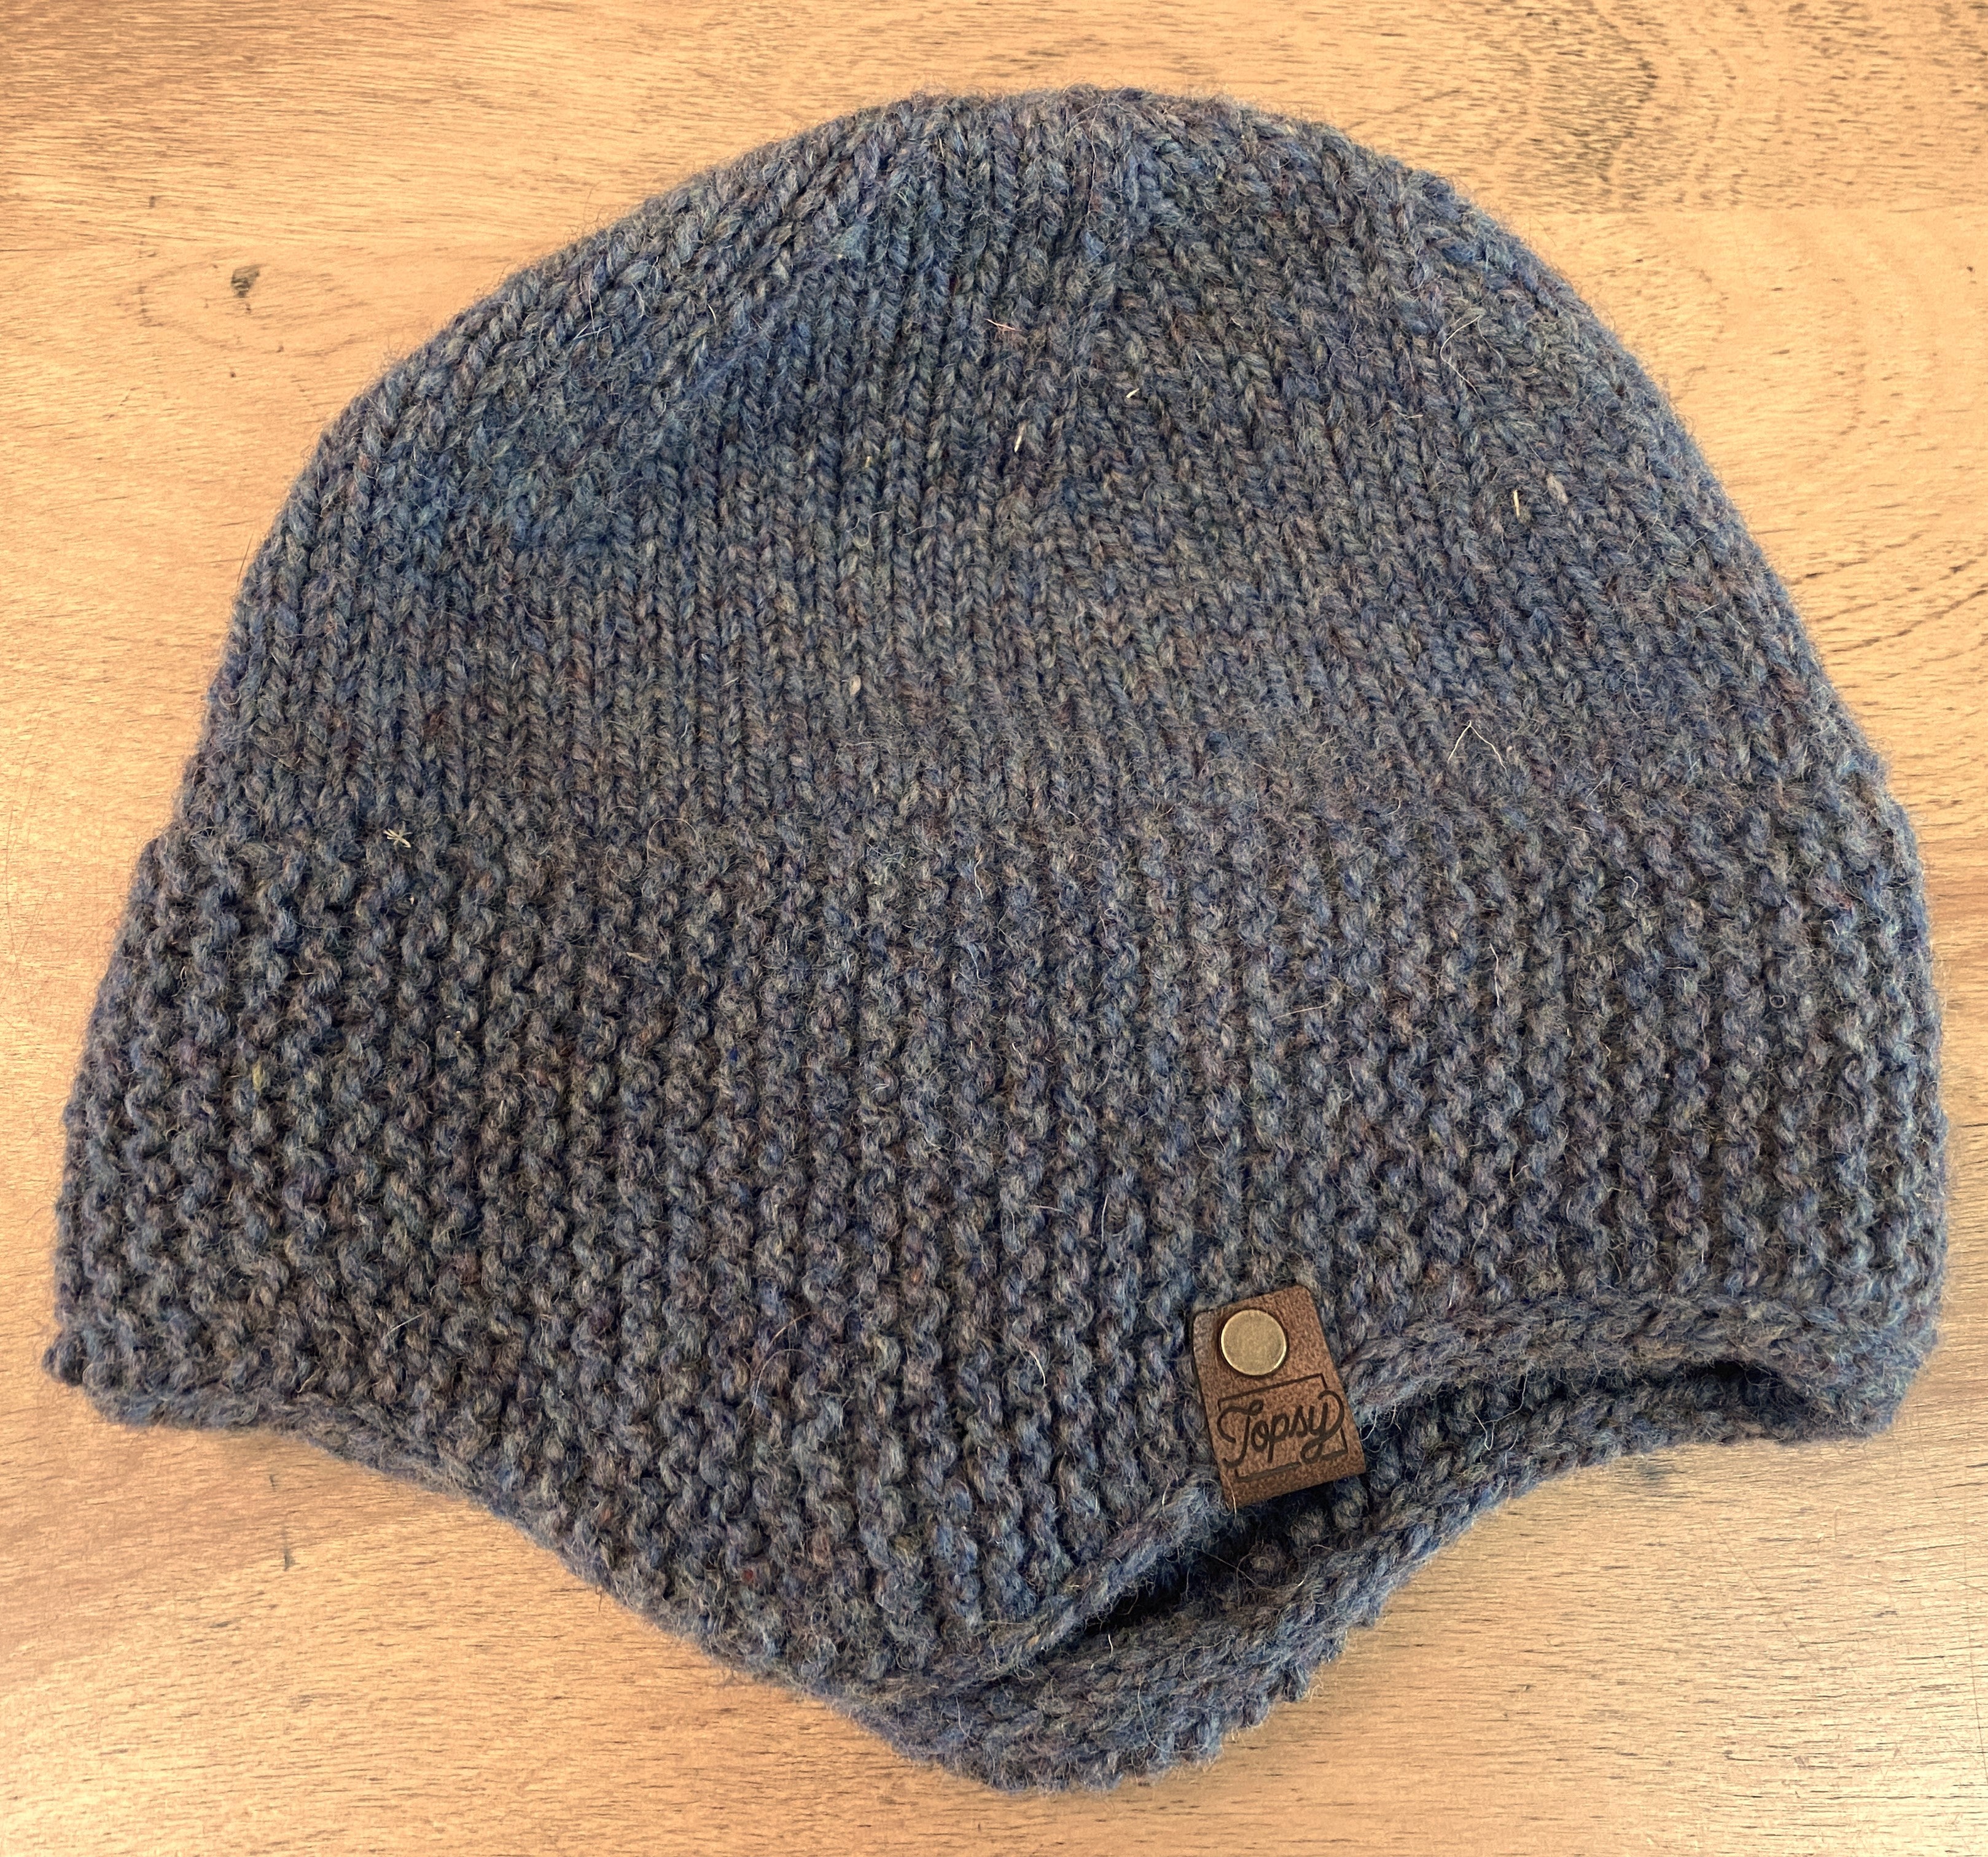 Mariner's wool hat